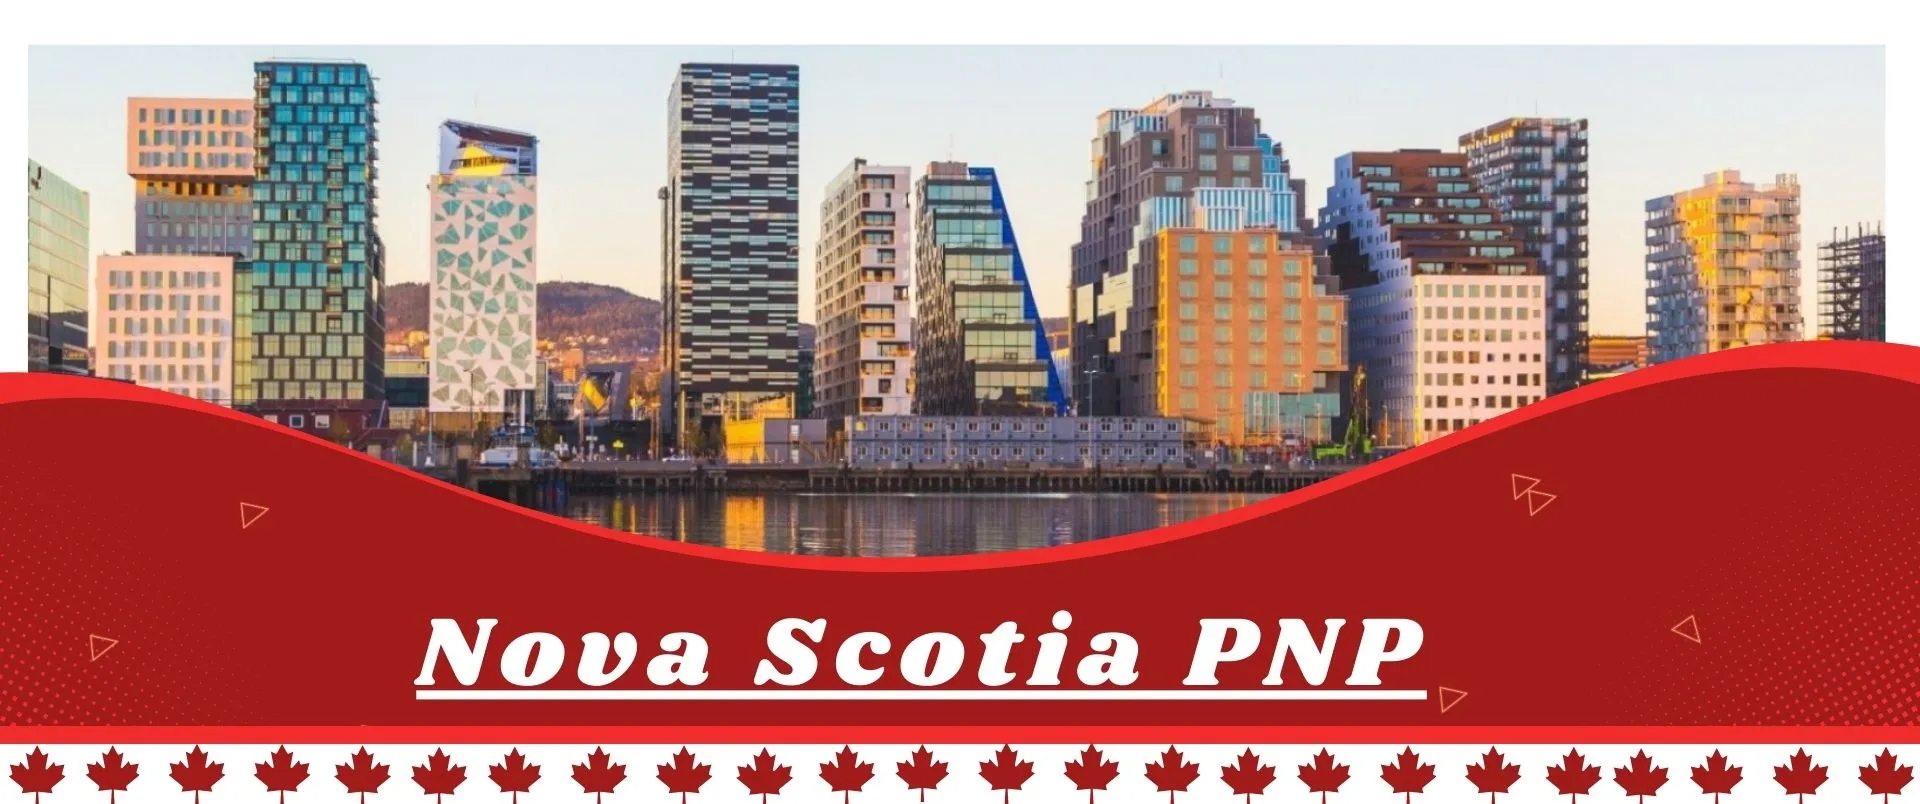 Nova Scotia PNP Beautiful buildings in day time City view